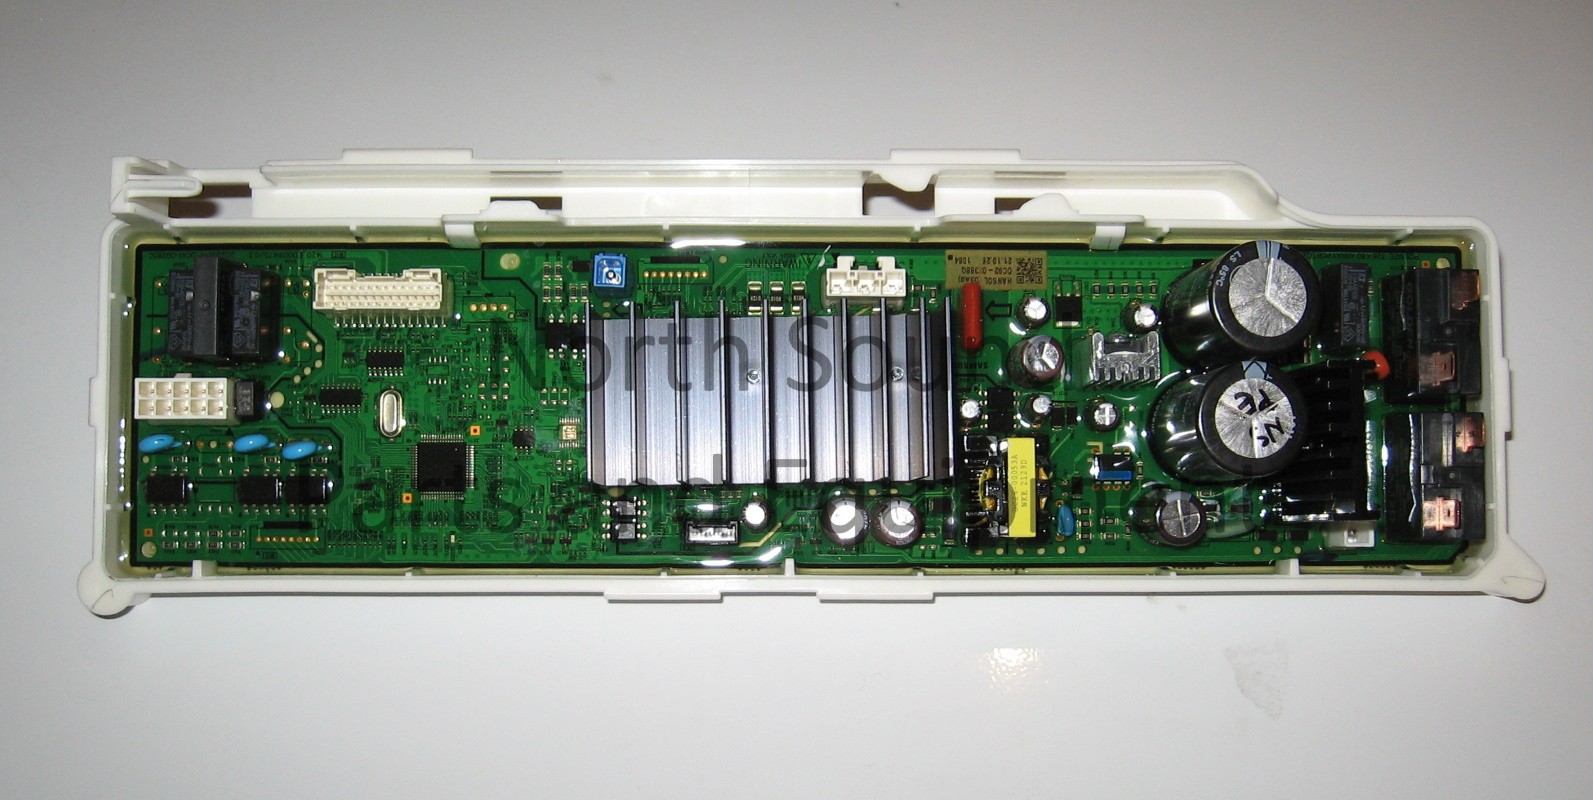 Samsung Washer Main Control Board, front